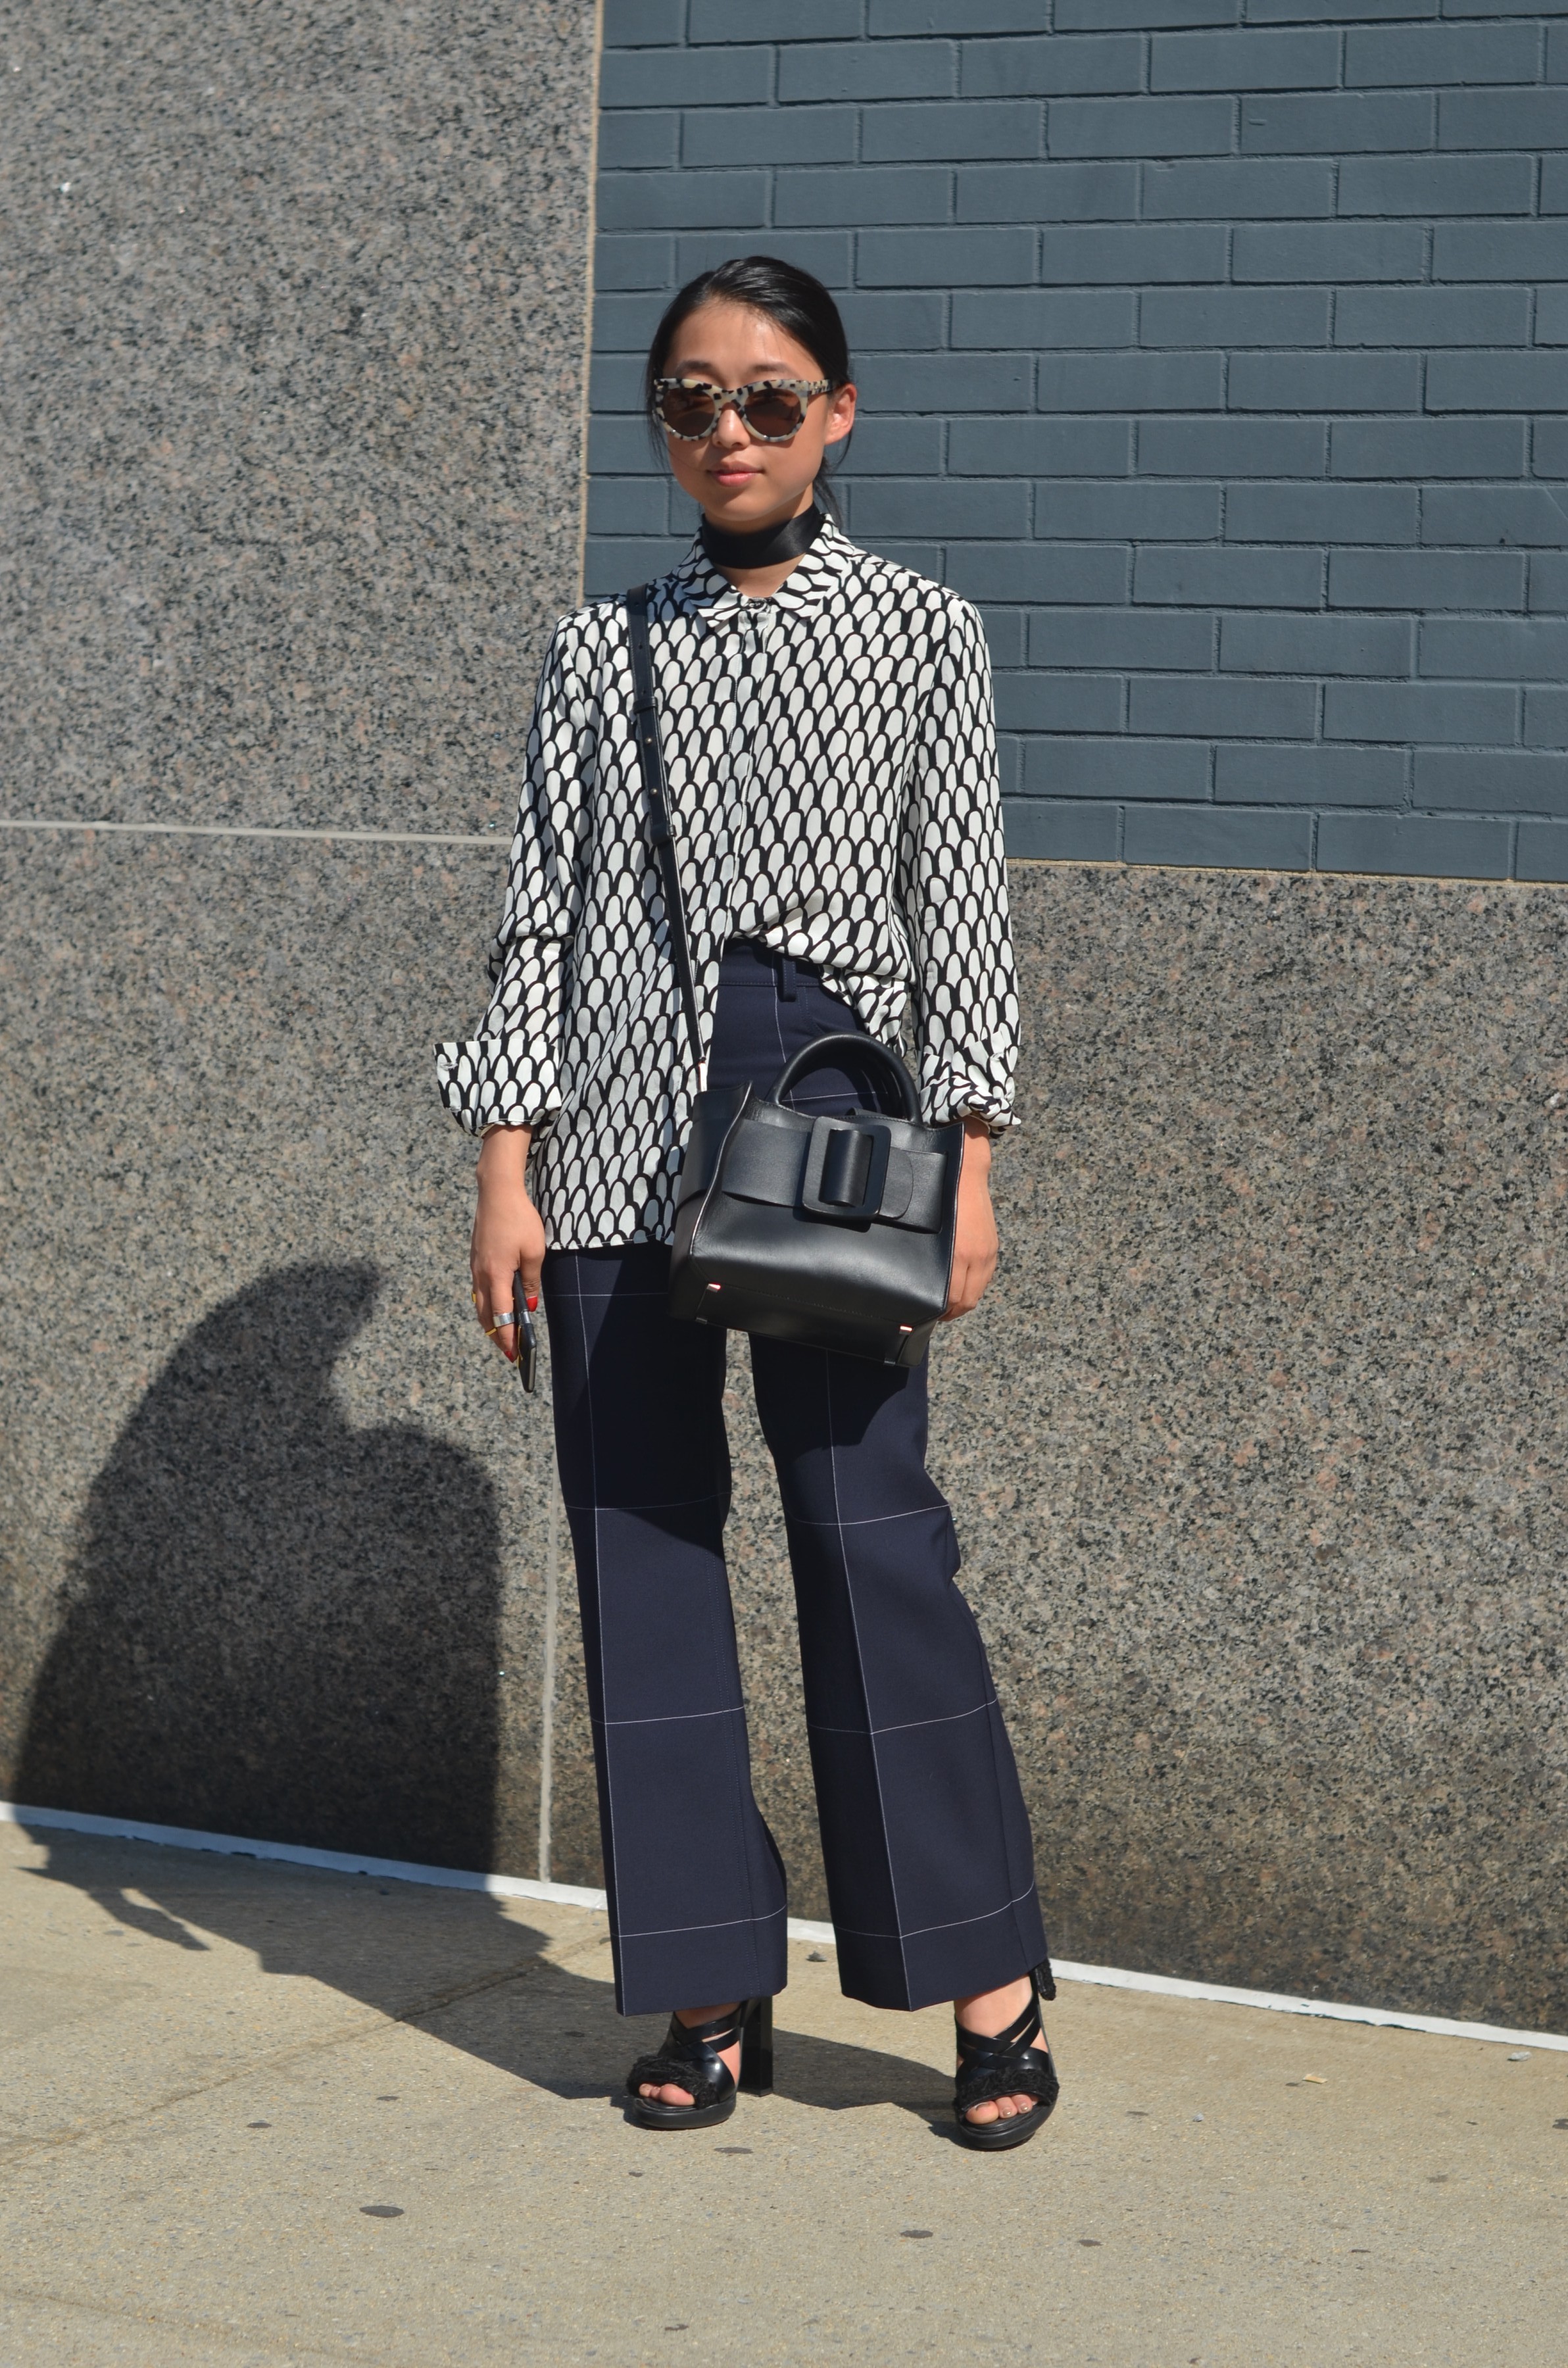 fashion blogger at NYFW